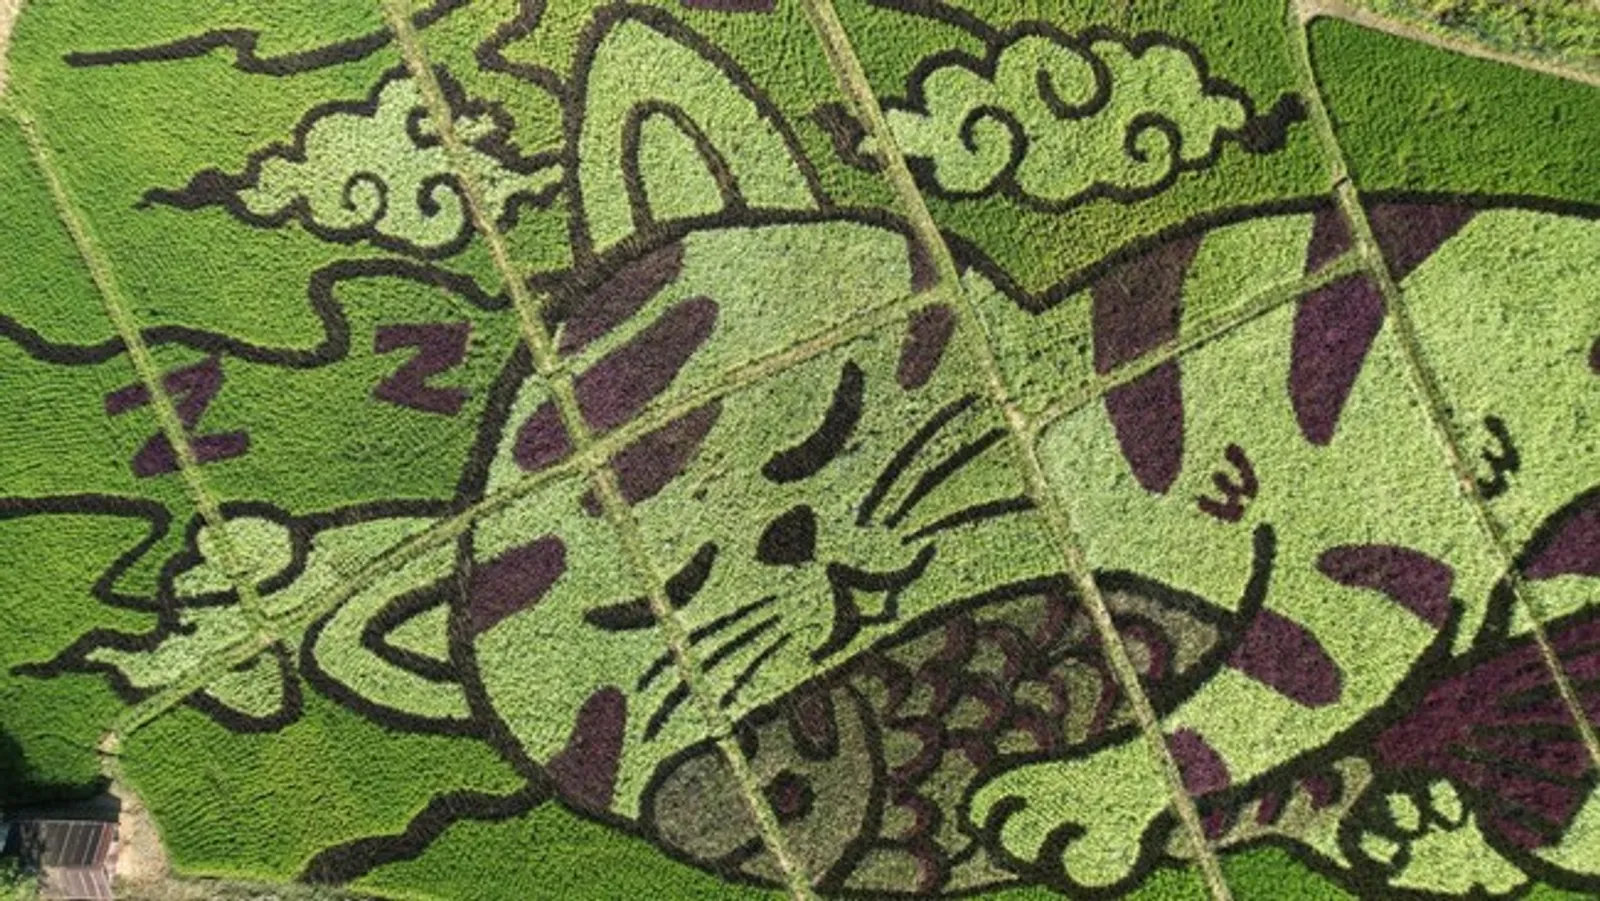 Di Thailand, Ada Lukisan Kucing Raksasa di Atas Ladang Sawah